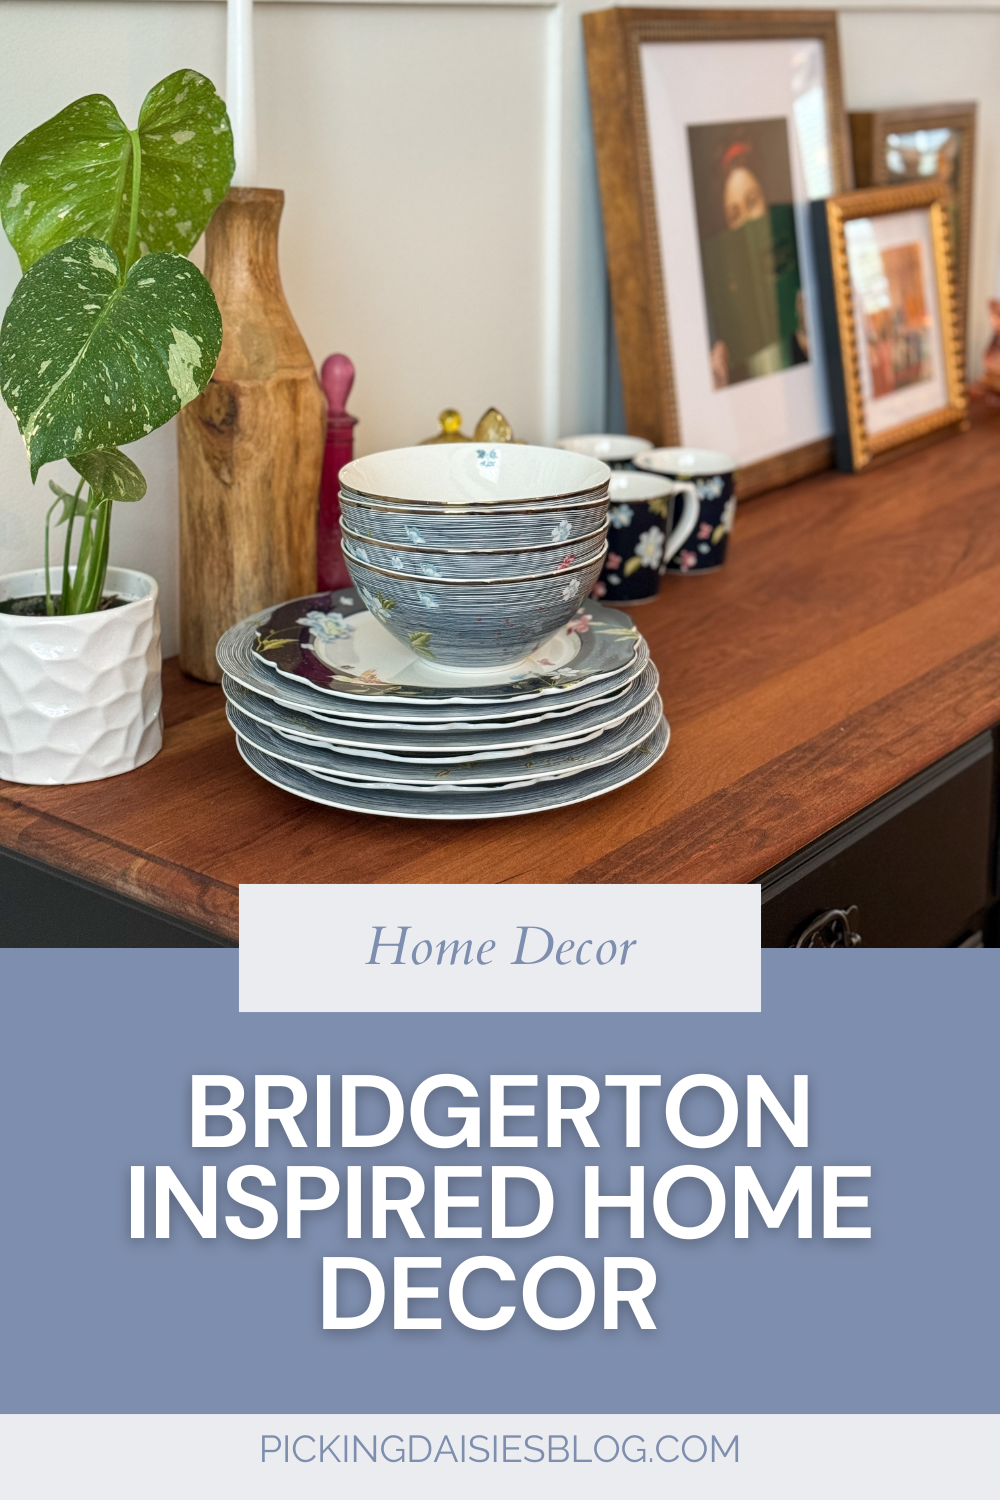 Bridgerton Inspired Home Decor from Laura Ashley